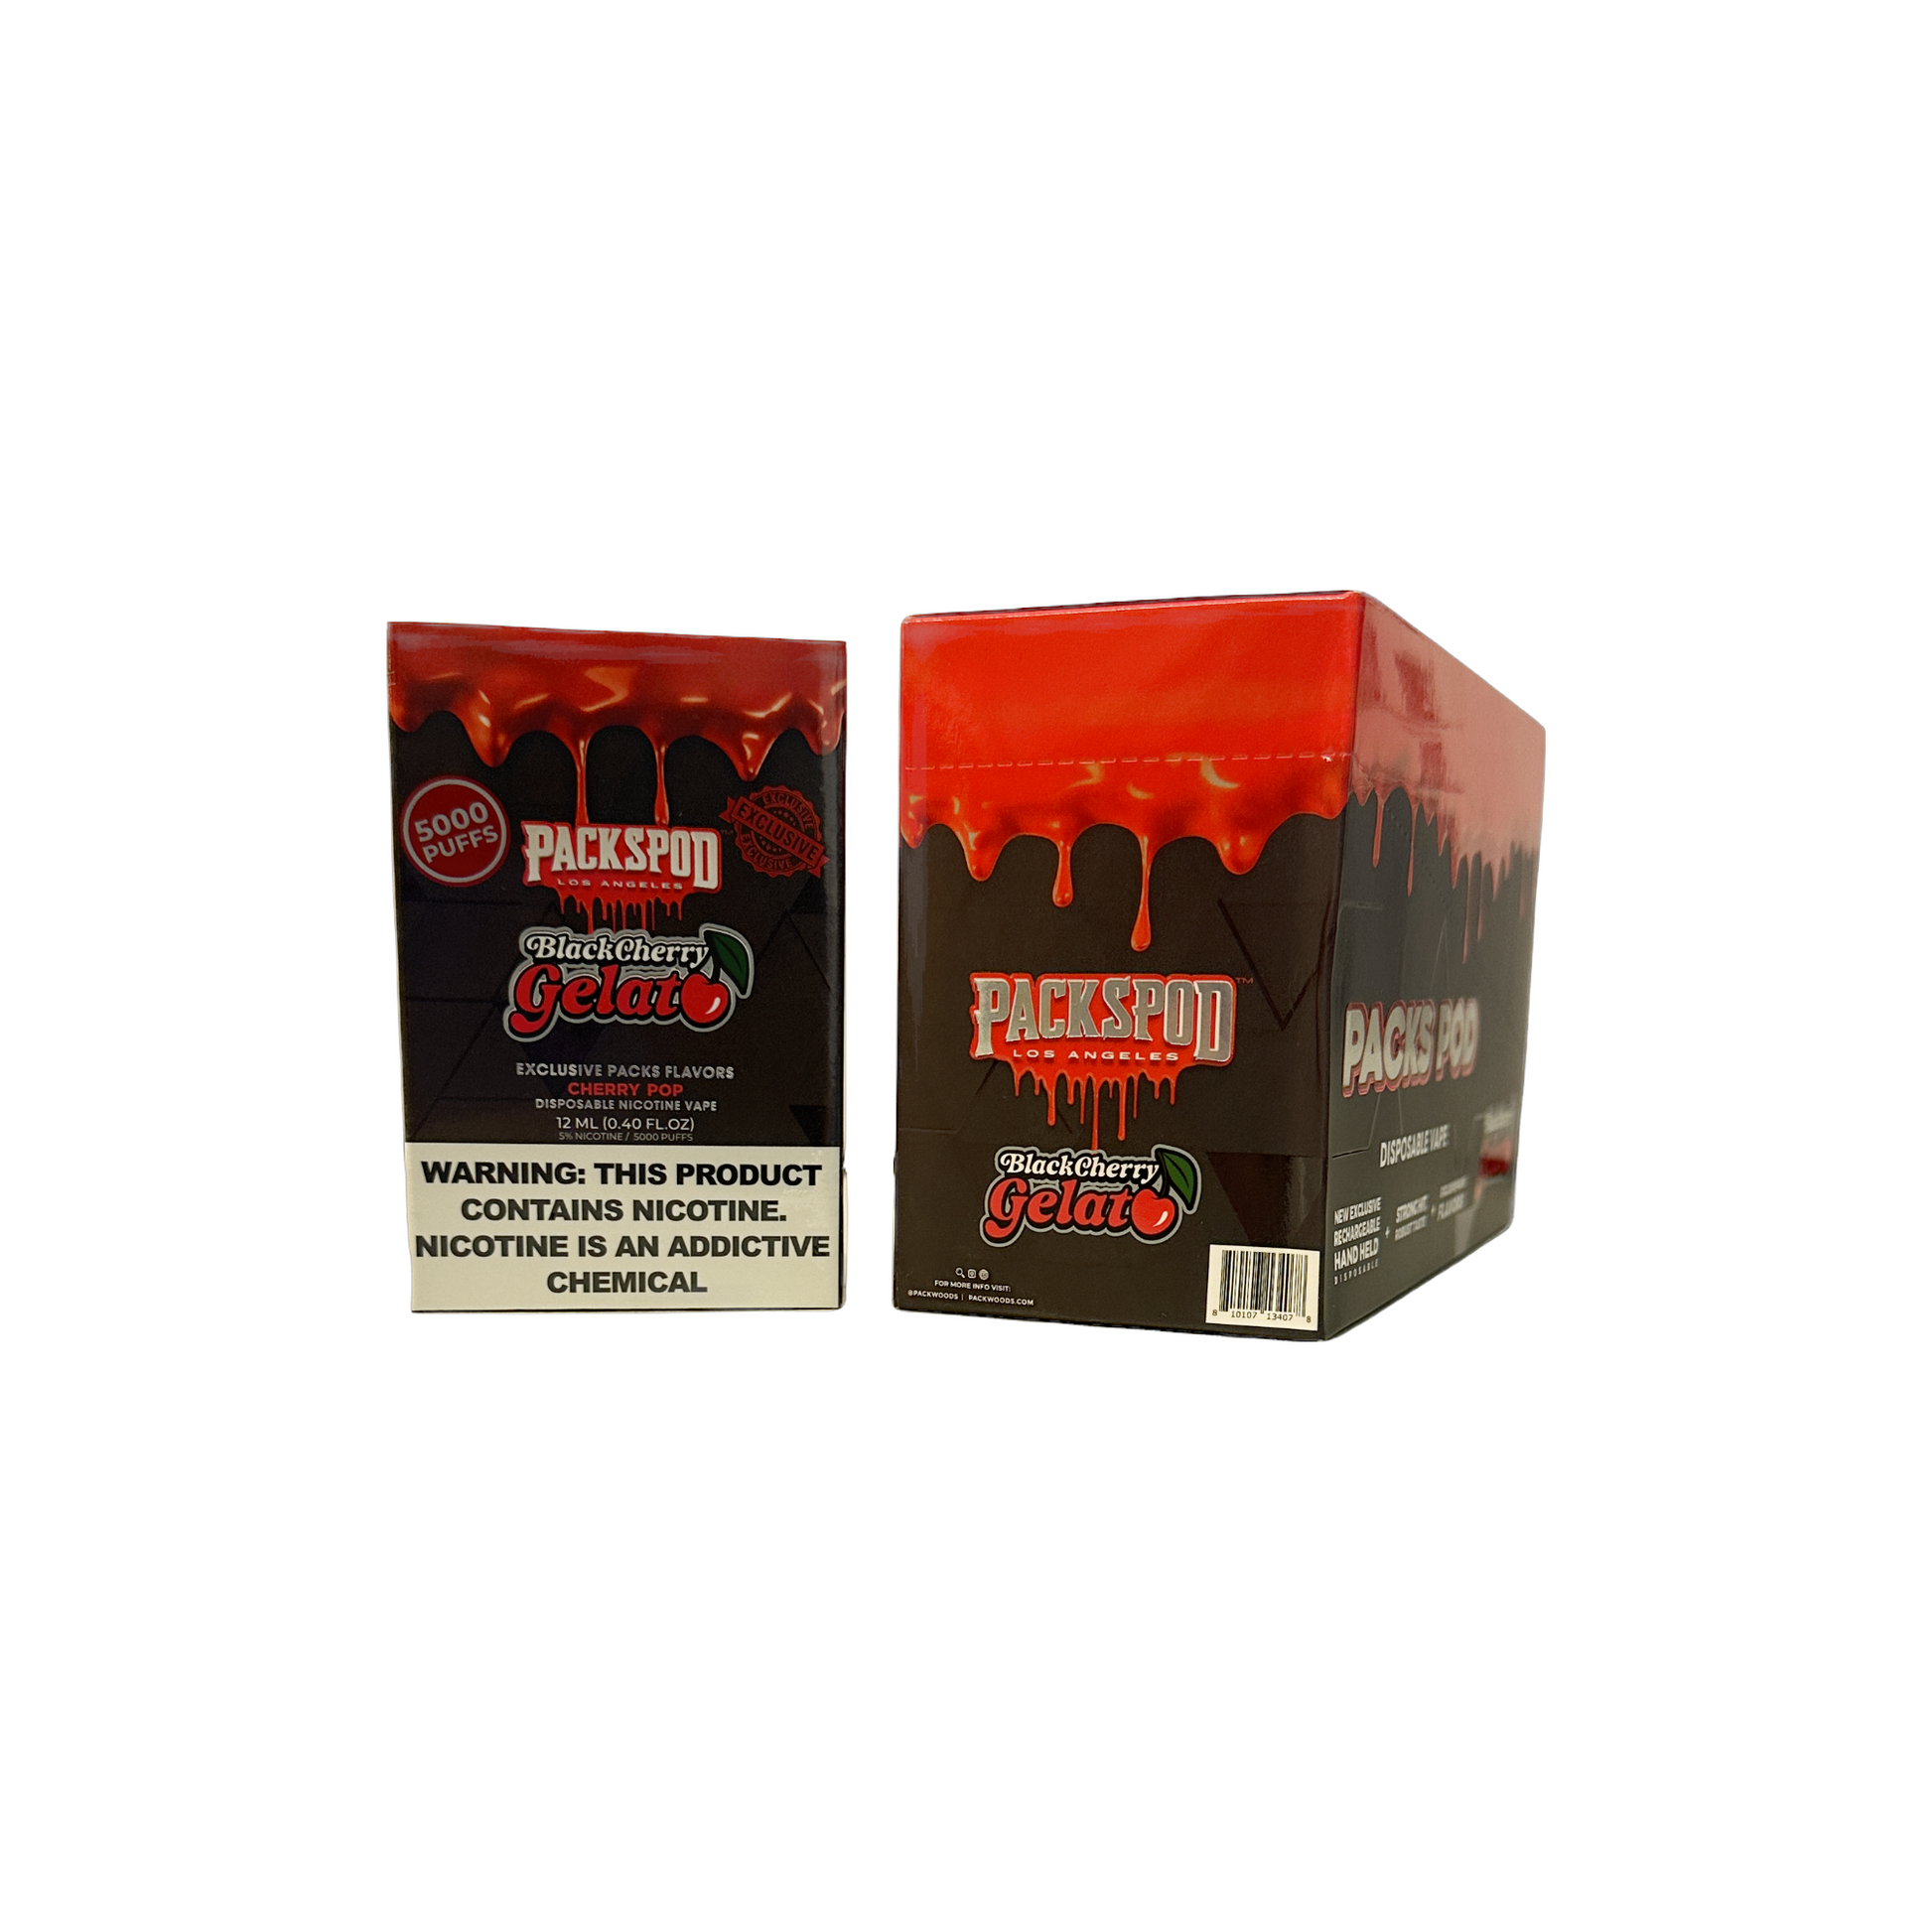 Packspod Disposable Vape 5000 Puffs - Black Cherry Gelato